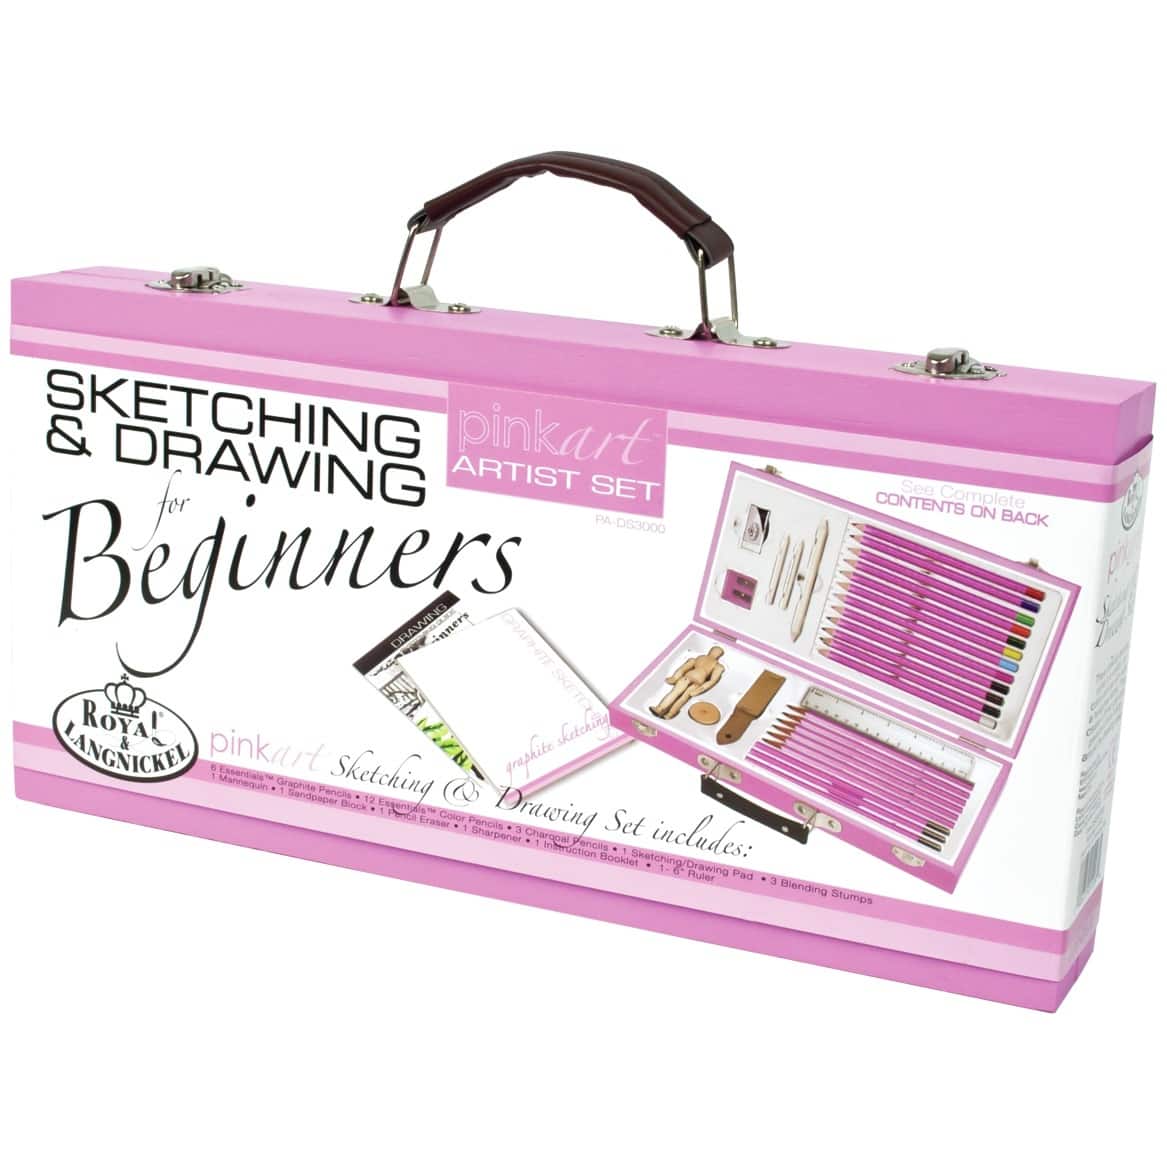  Royal & Langnickel Pink Art Beginner Artist Sketching and  Drawing Wood Box Set, Sketch & Draw : Everything Else